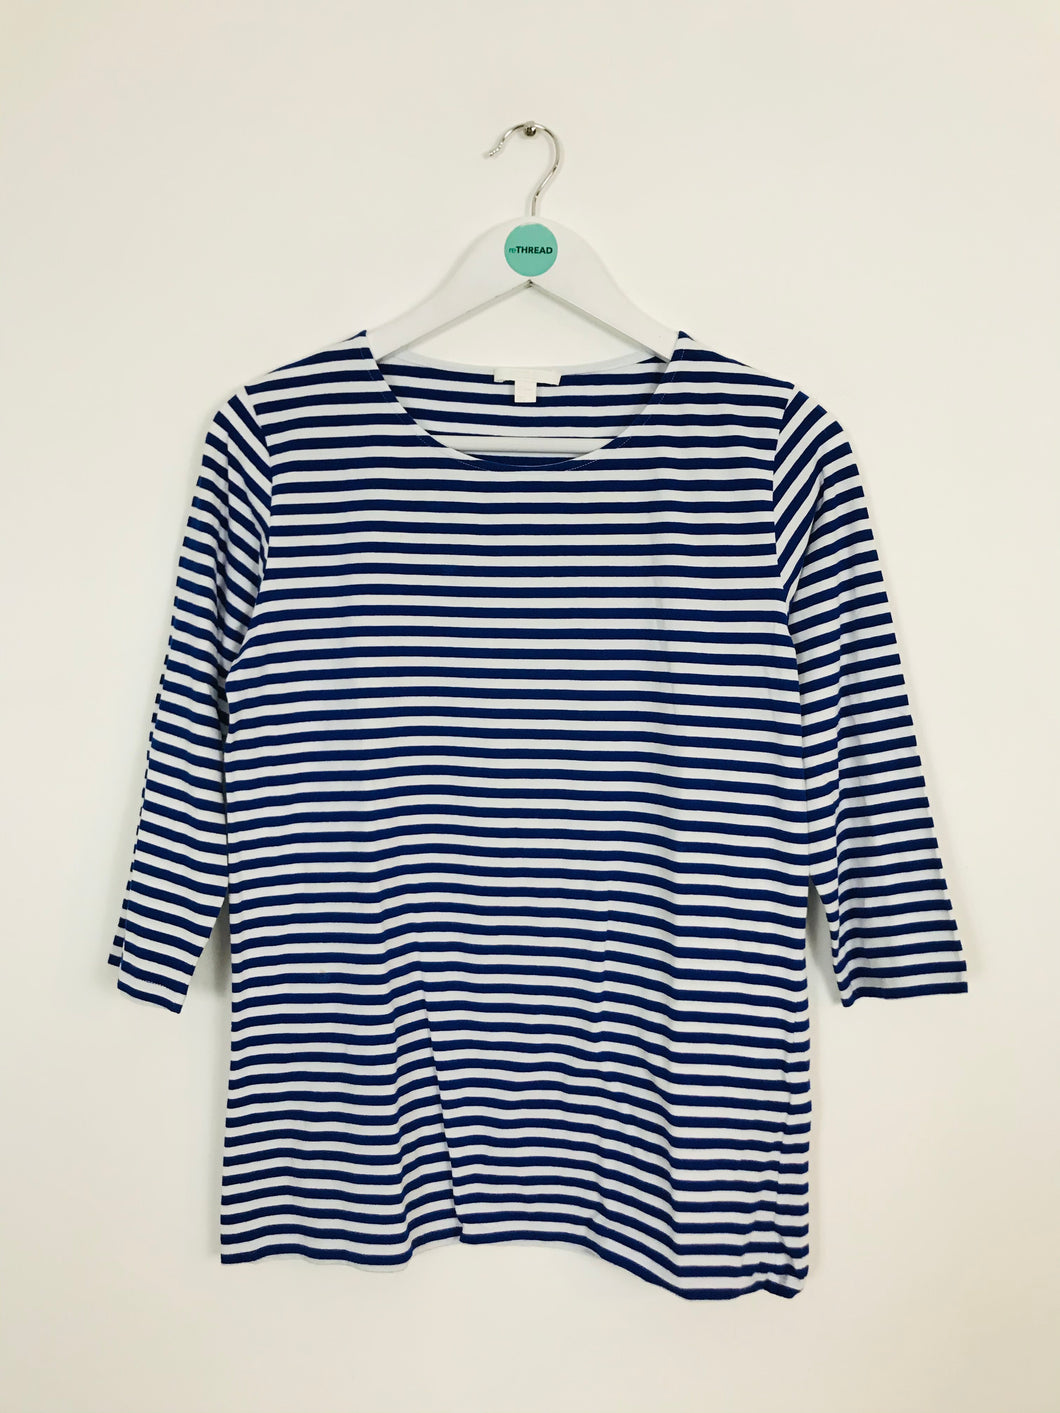 Cos Women’s Stripe 3/4 Length Striped T-shirt | M UK10-12 | Blue